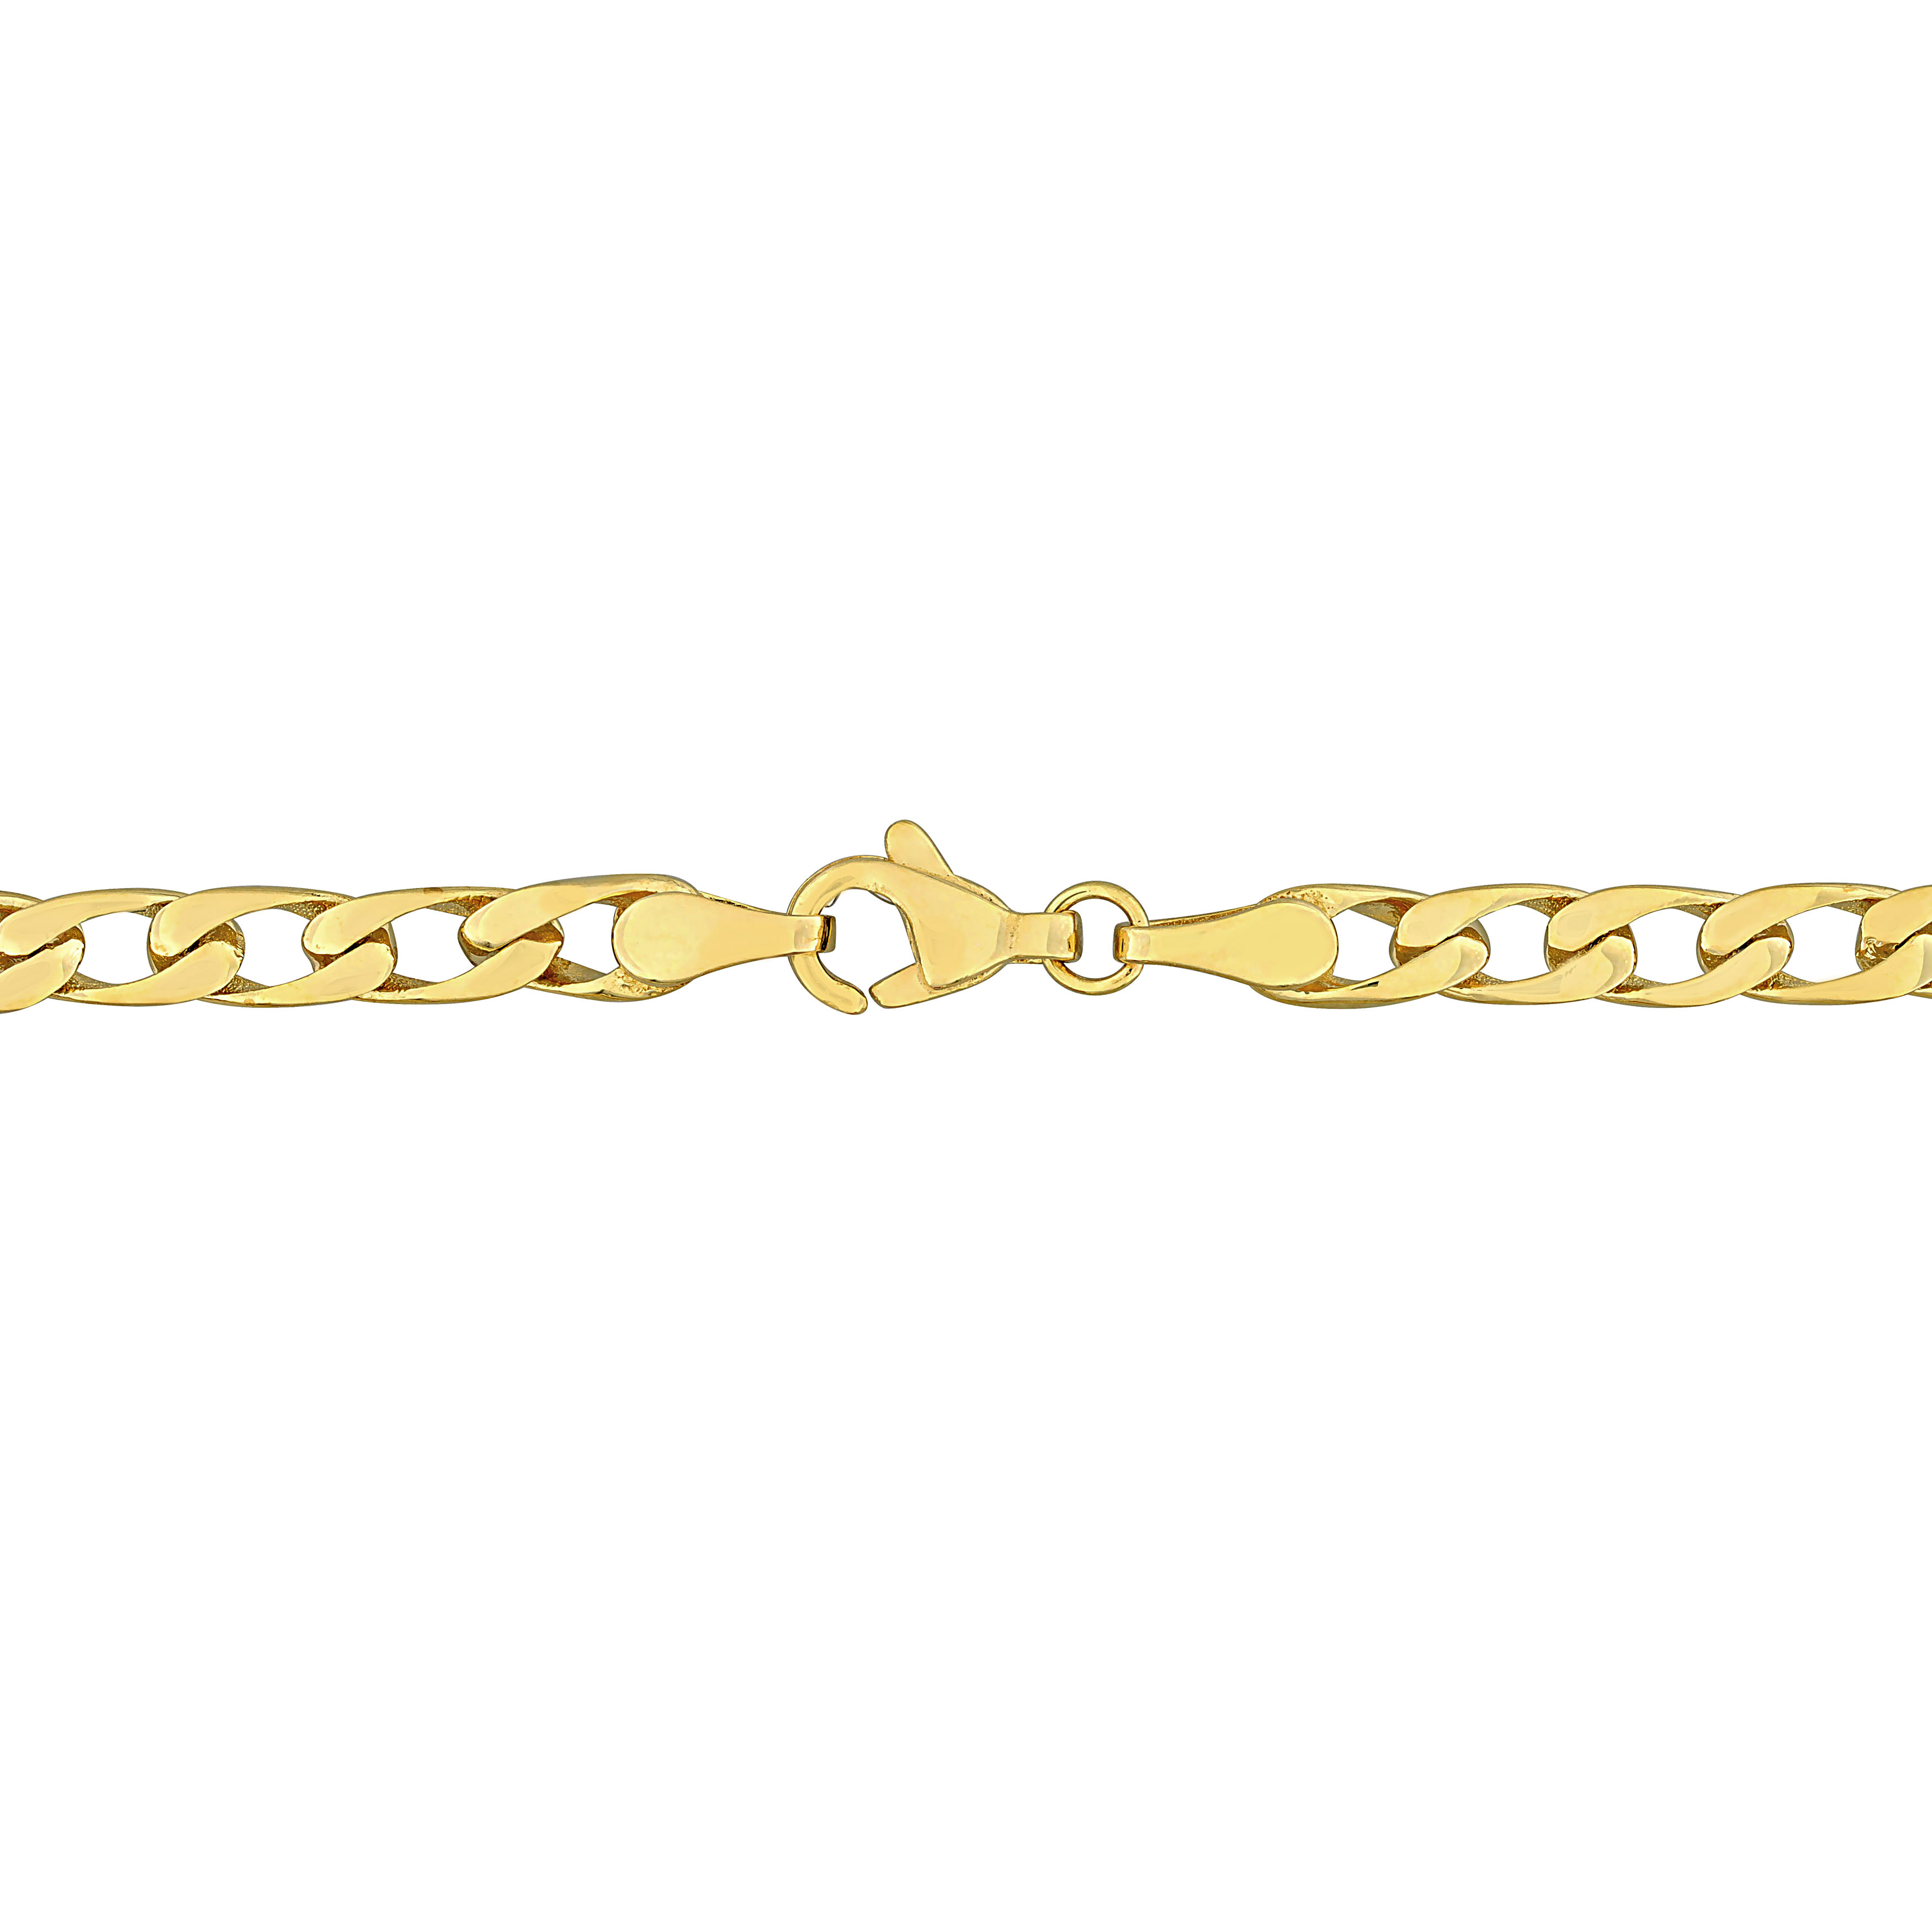 3 CT TGW Oval-cut Ruby Curb Link Station Bracelet in 10k Yellow Gold - 7.5 in.